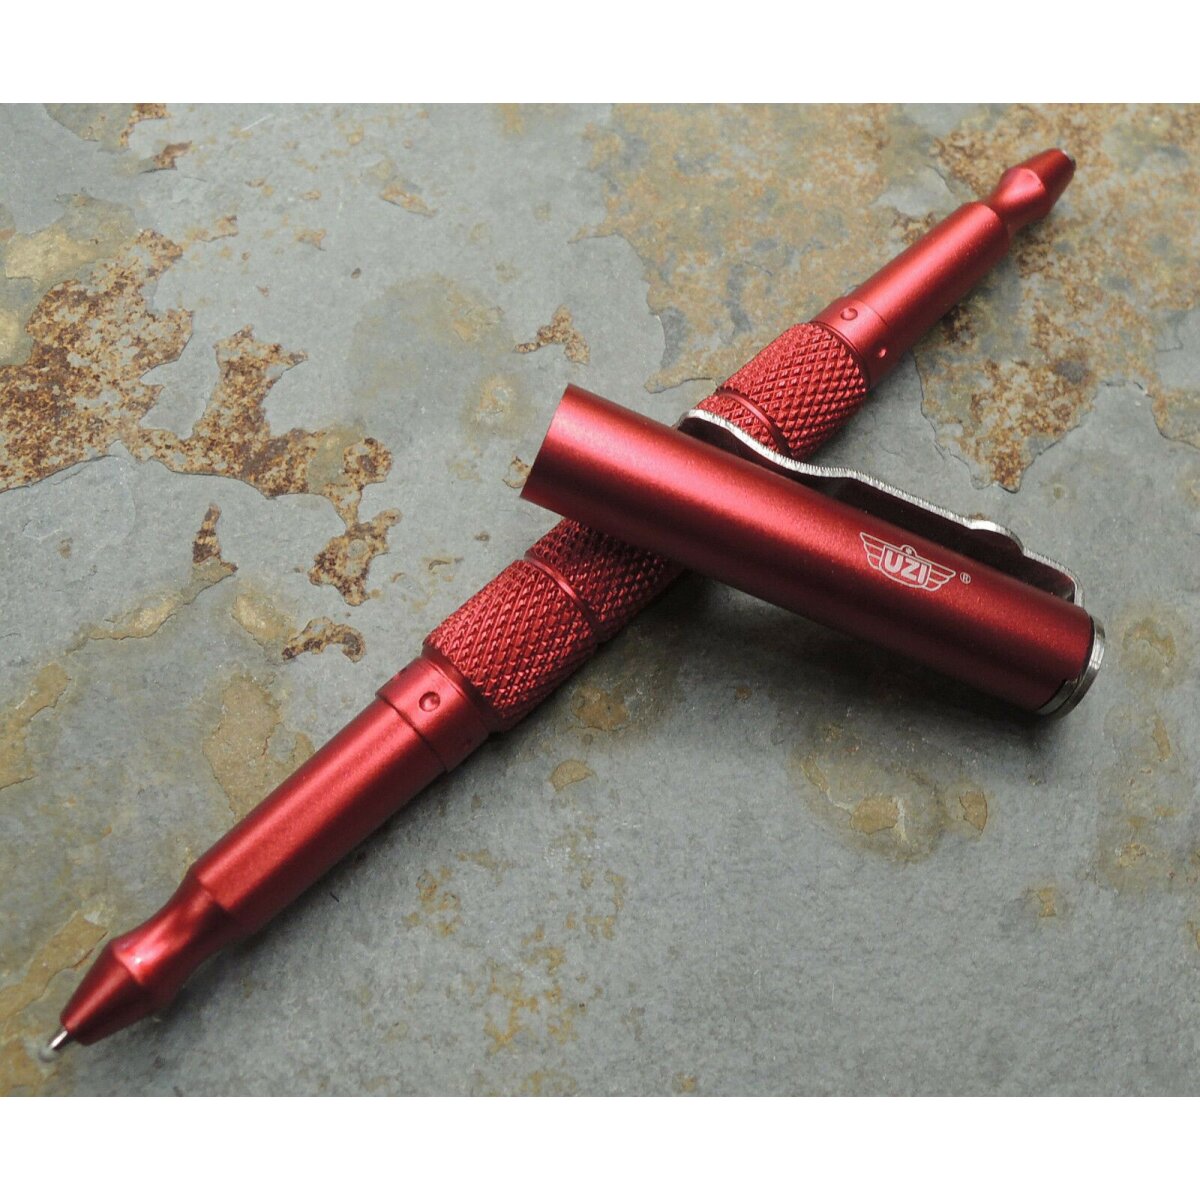 https://soeldner-messer.com/media/image/product/3770/lg/uzi-tactical-pen-glassbreaker-kugelschreiber-kubotan-glasbrecher-red.jpg